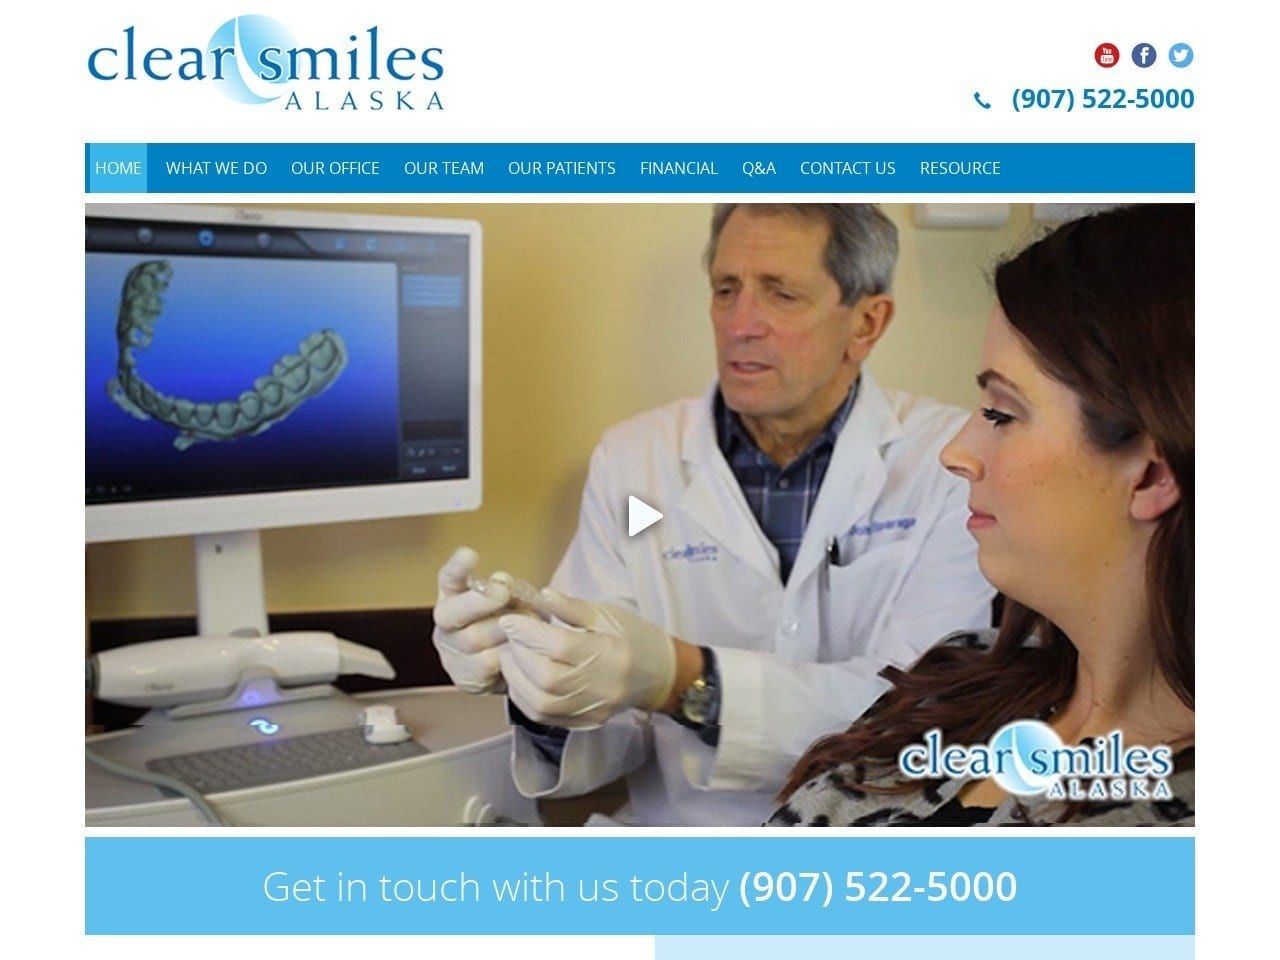 Clear Smiles Alaska Website Screenshot from clearsmilesalaska.com